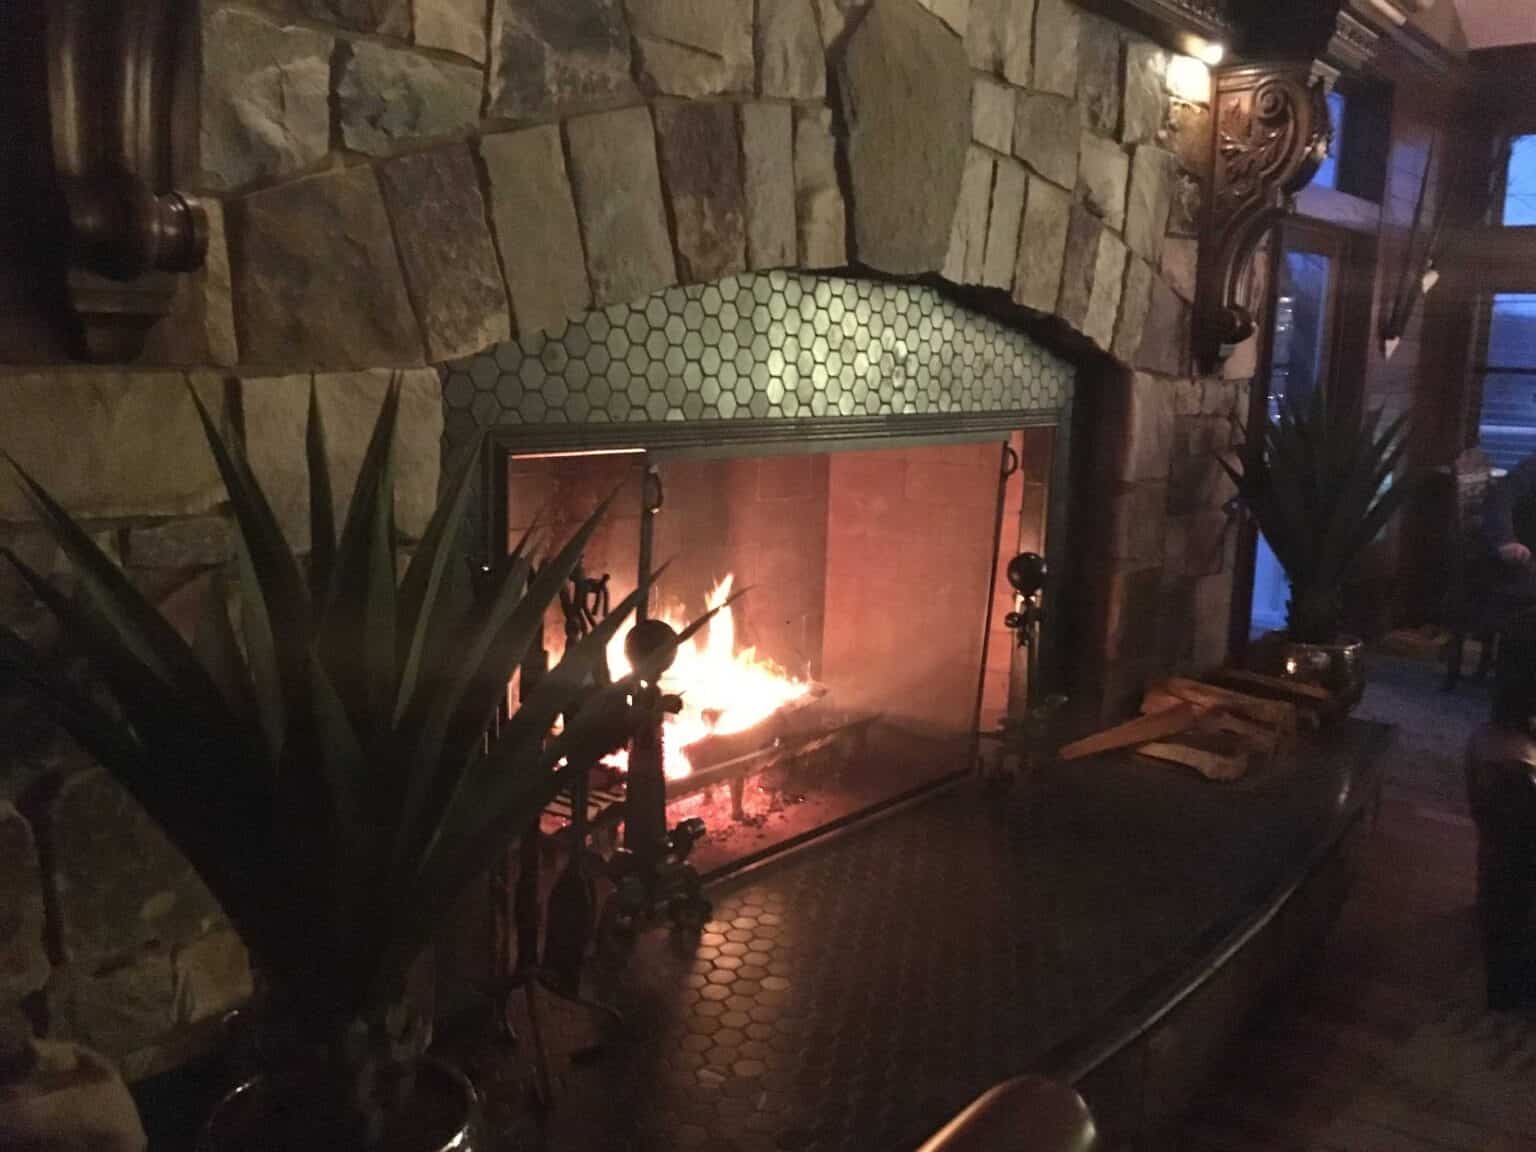 Johnny Manhattan's fireplace